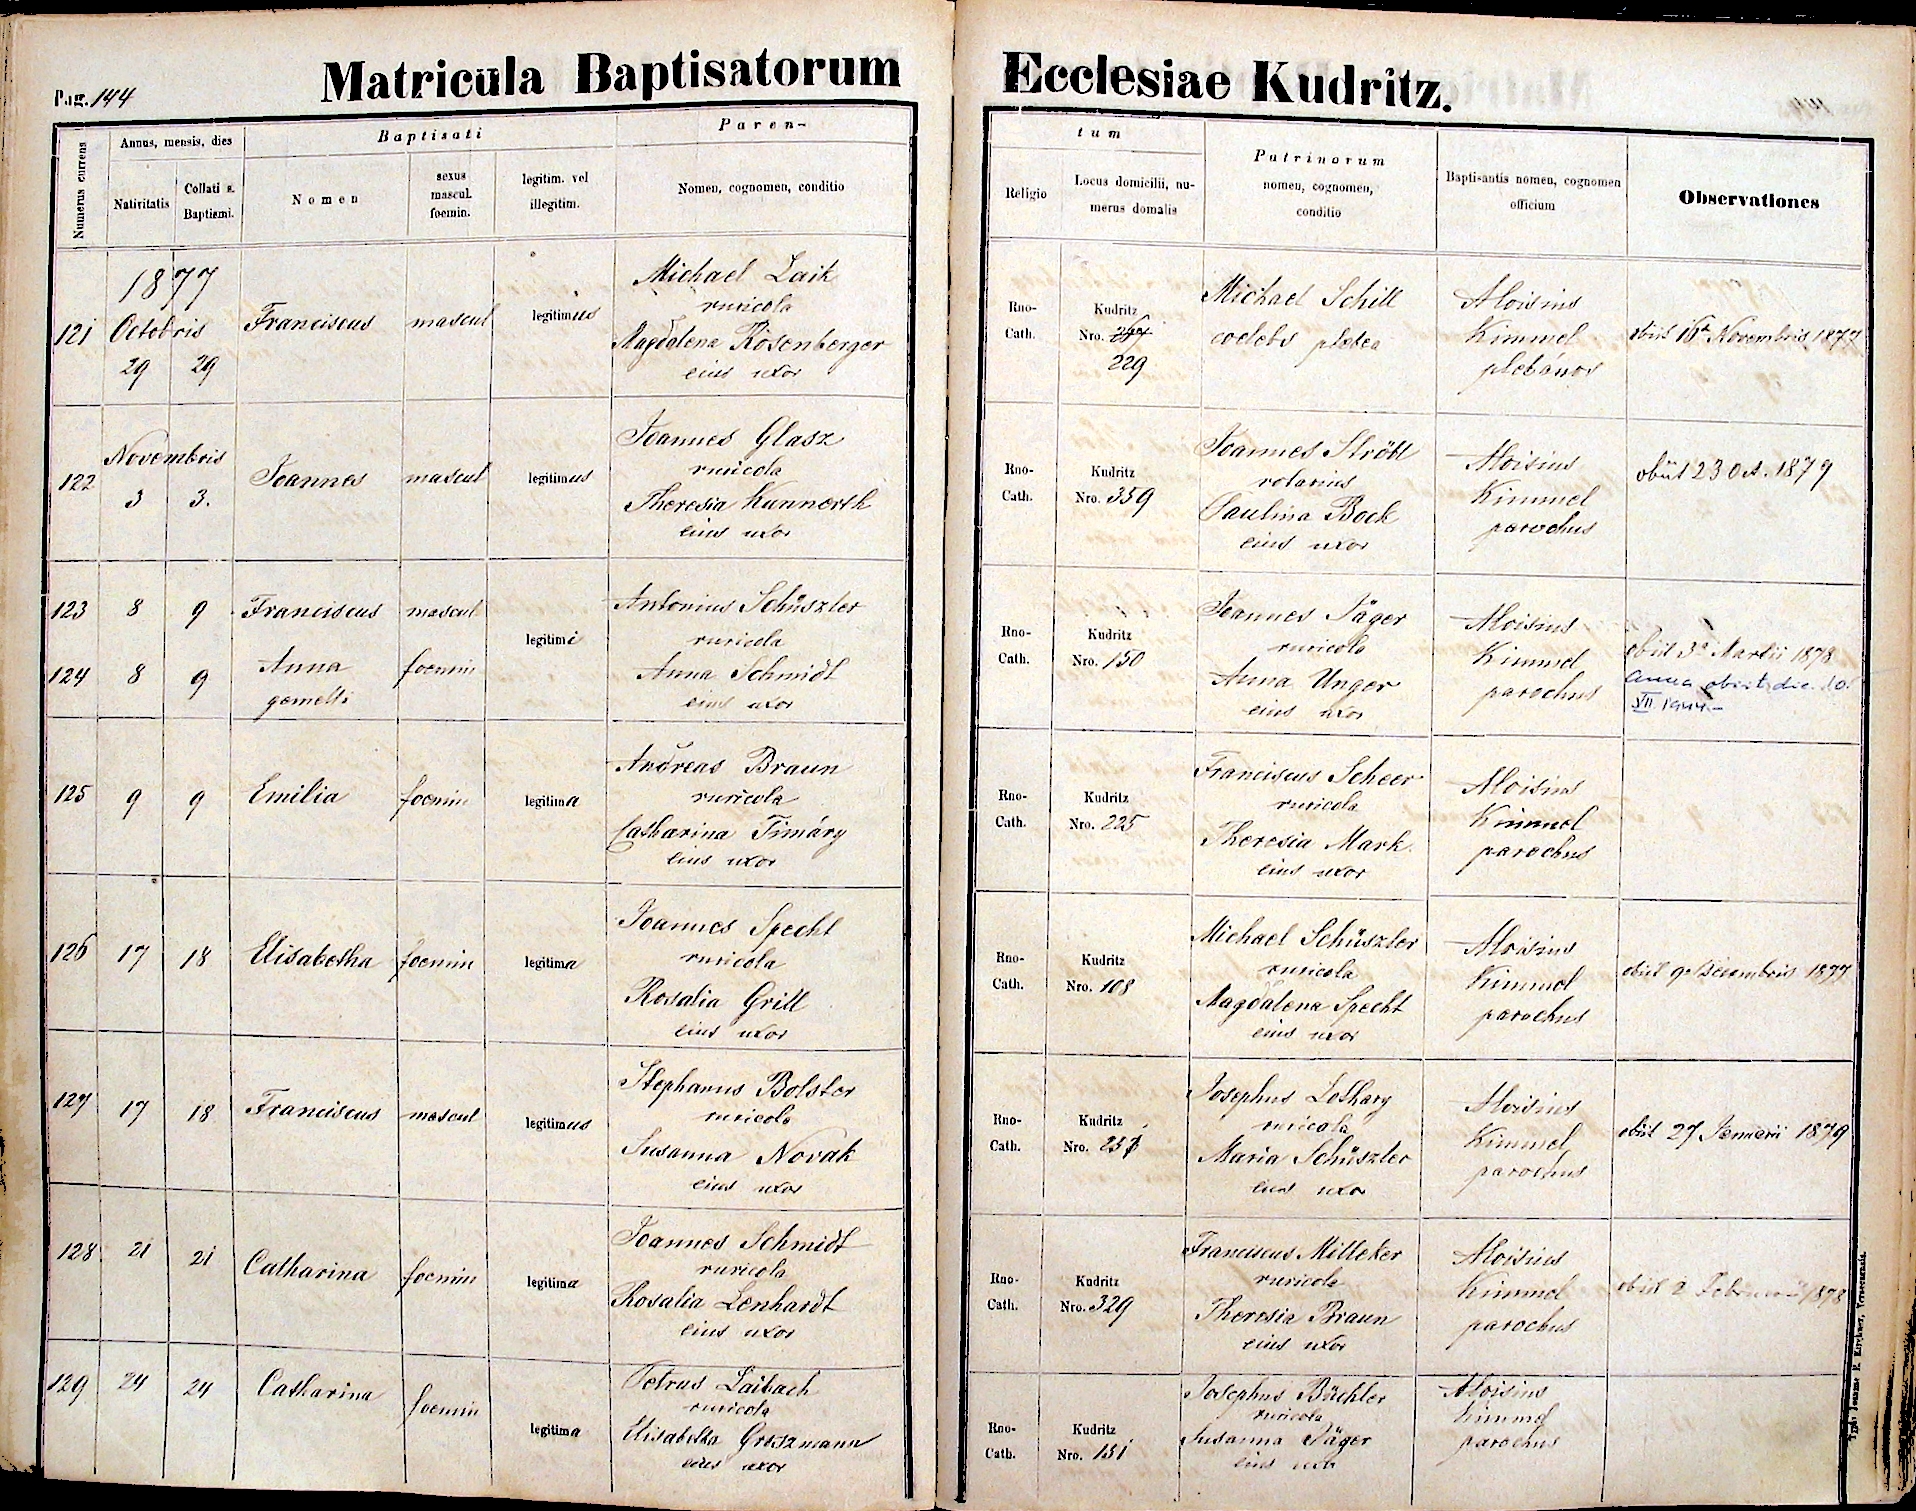 images/church_records/BIRTHS/1884-1899B/1893/144